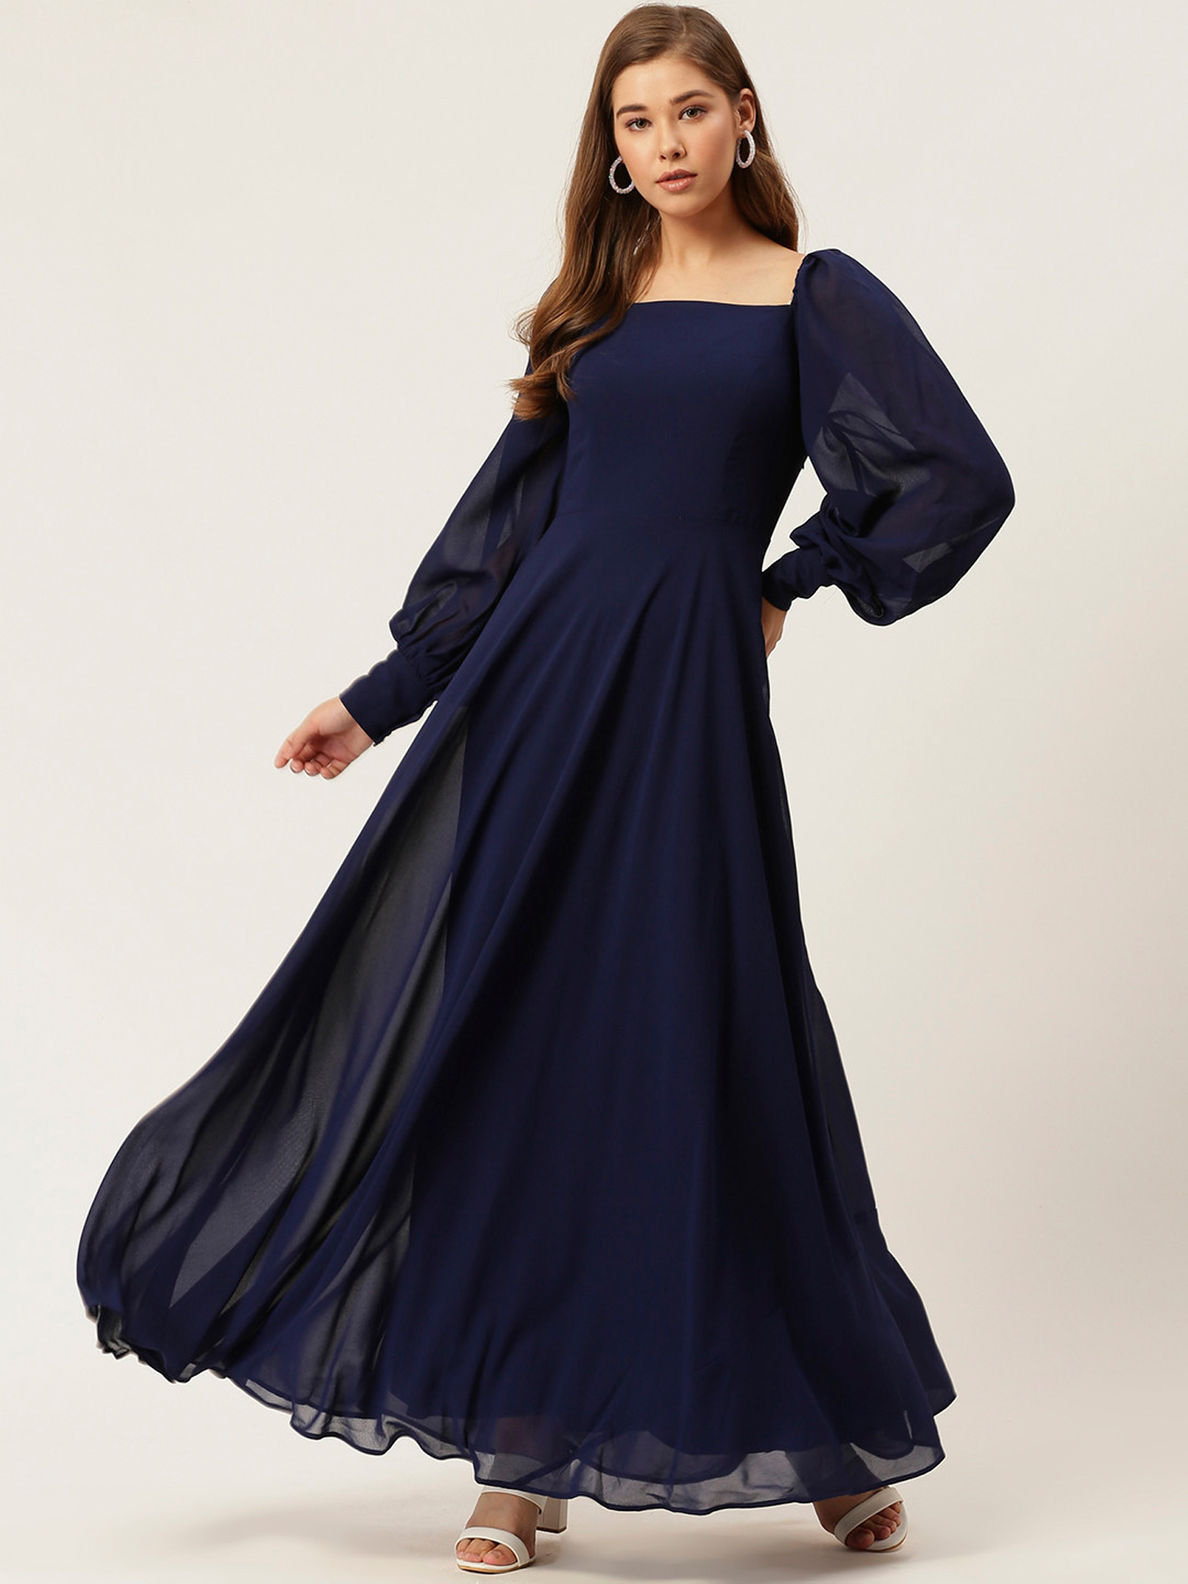 Navy blue maxi dresses | HOWTOWEAR Fashion